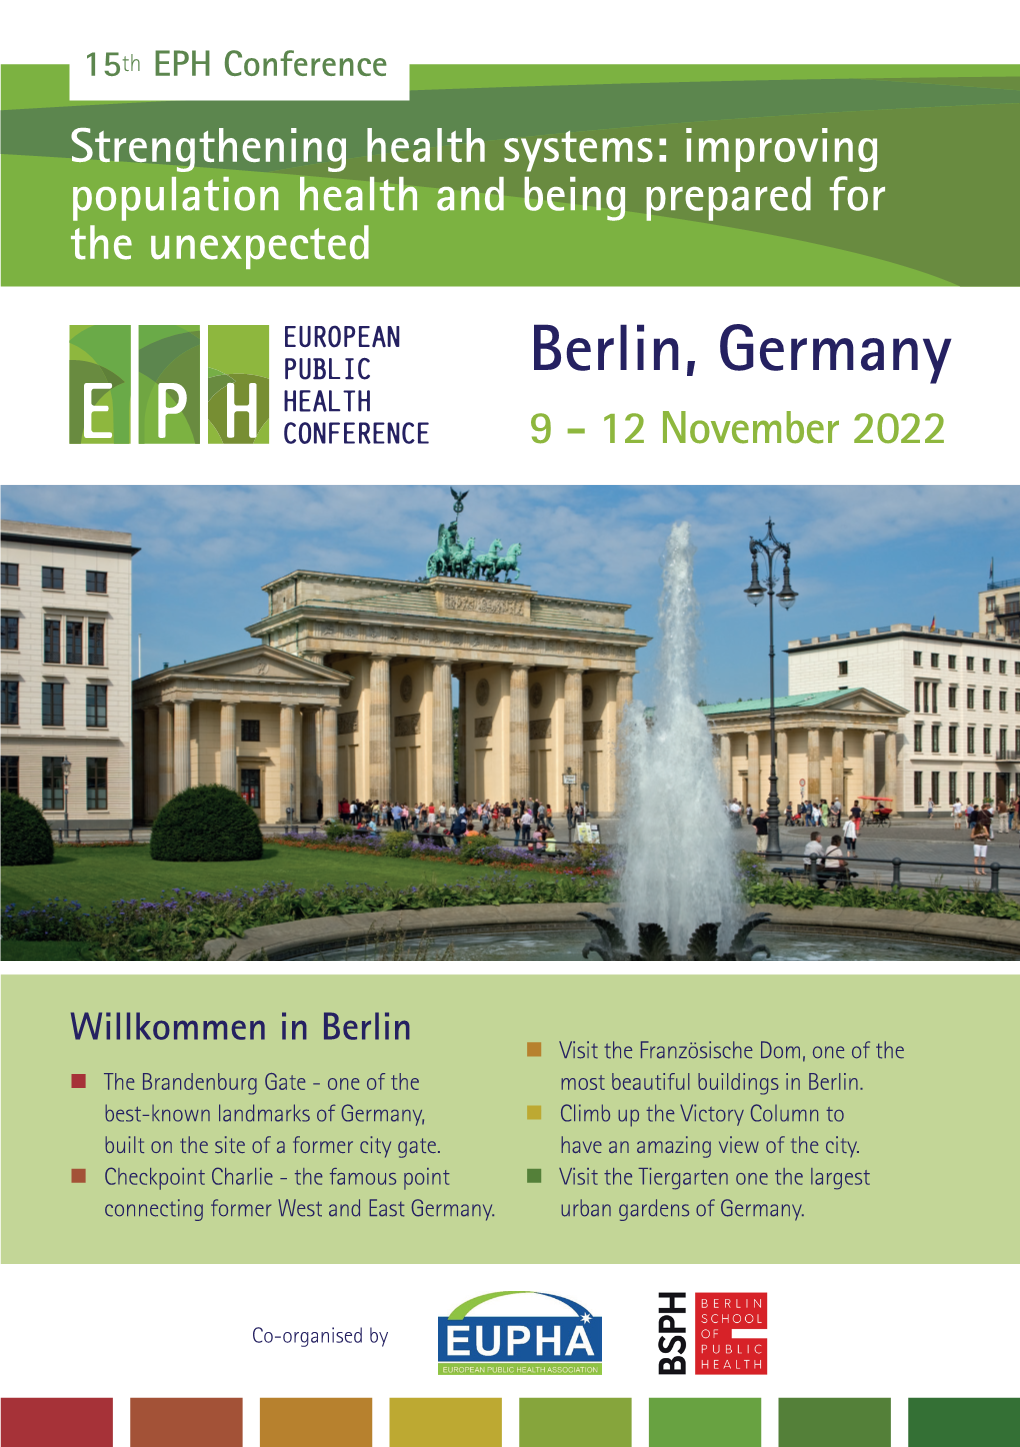 Berlin, Germany 9 - 12 November 2022